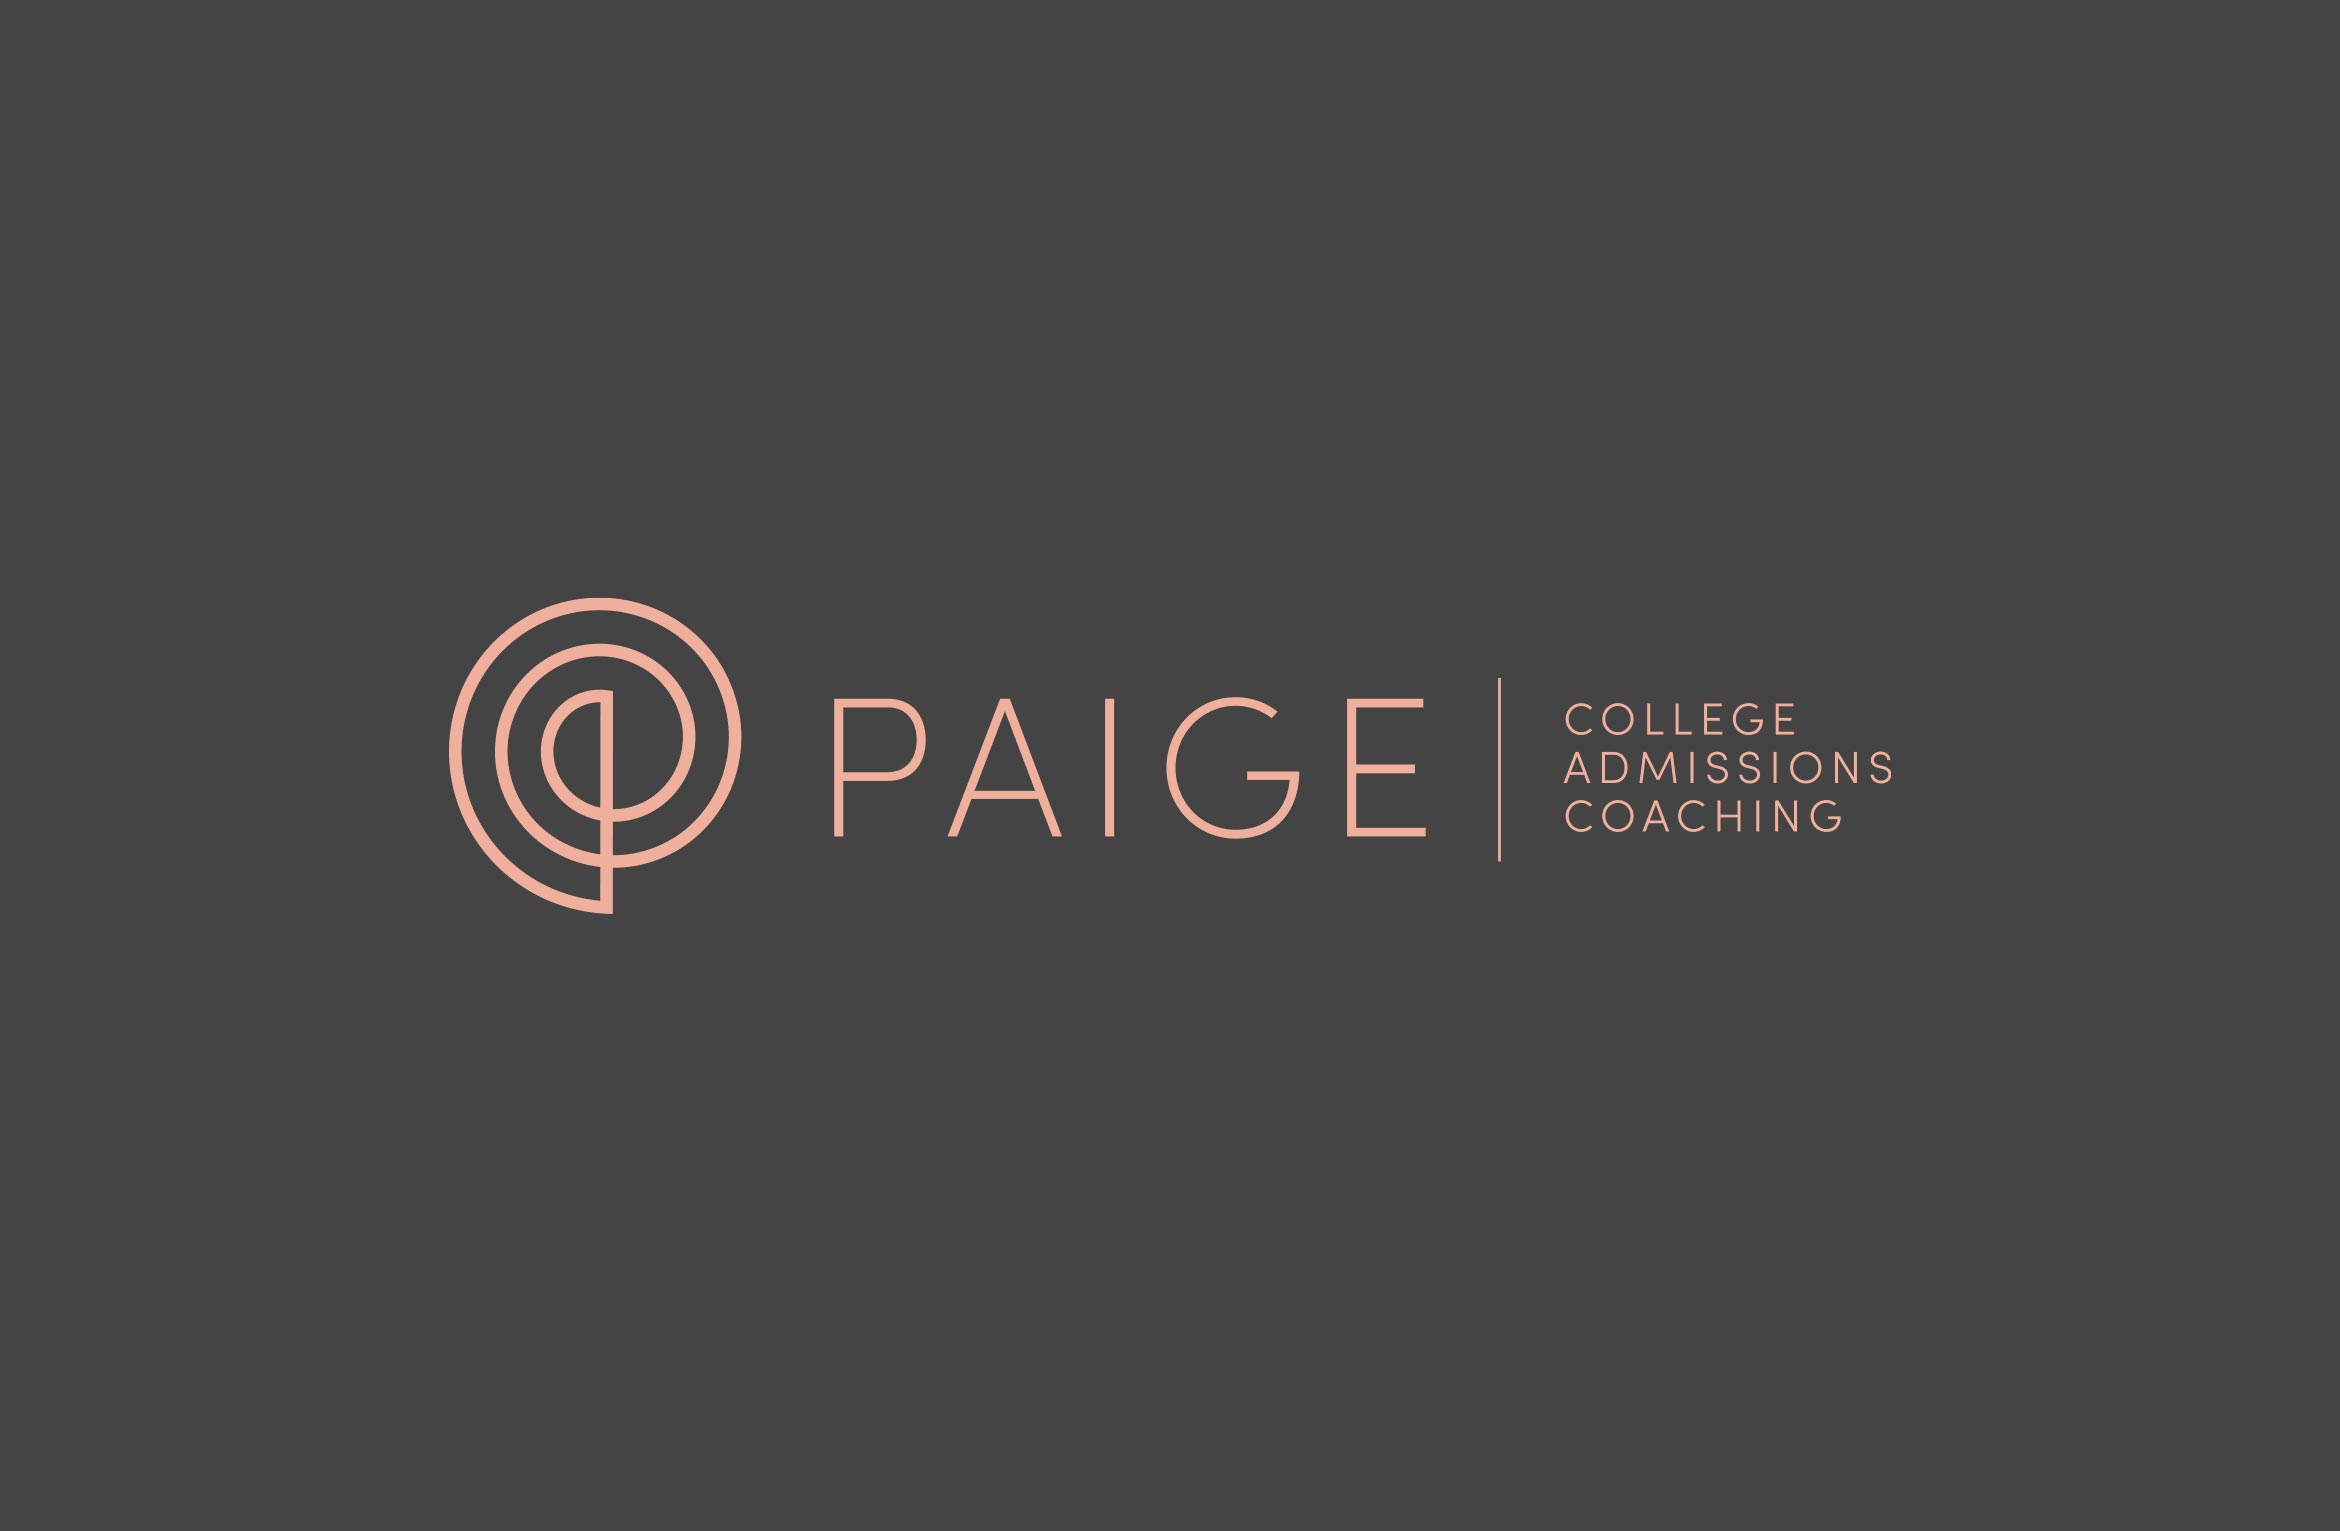 paige logo lockup with P monogram designed like a fibonacci circle, peach on charcoal